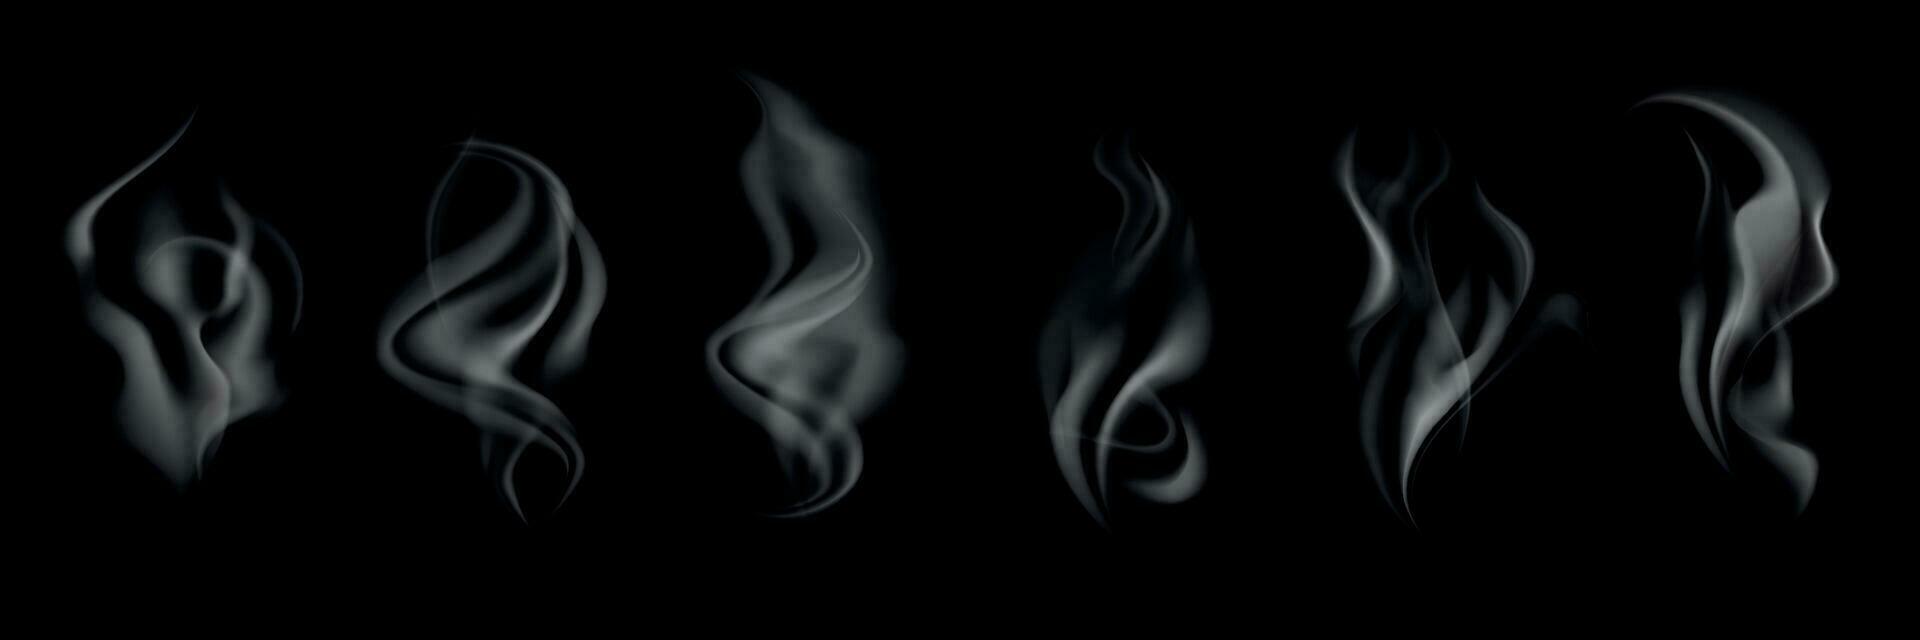 vapor o fumar resumen formas en negro vector